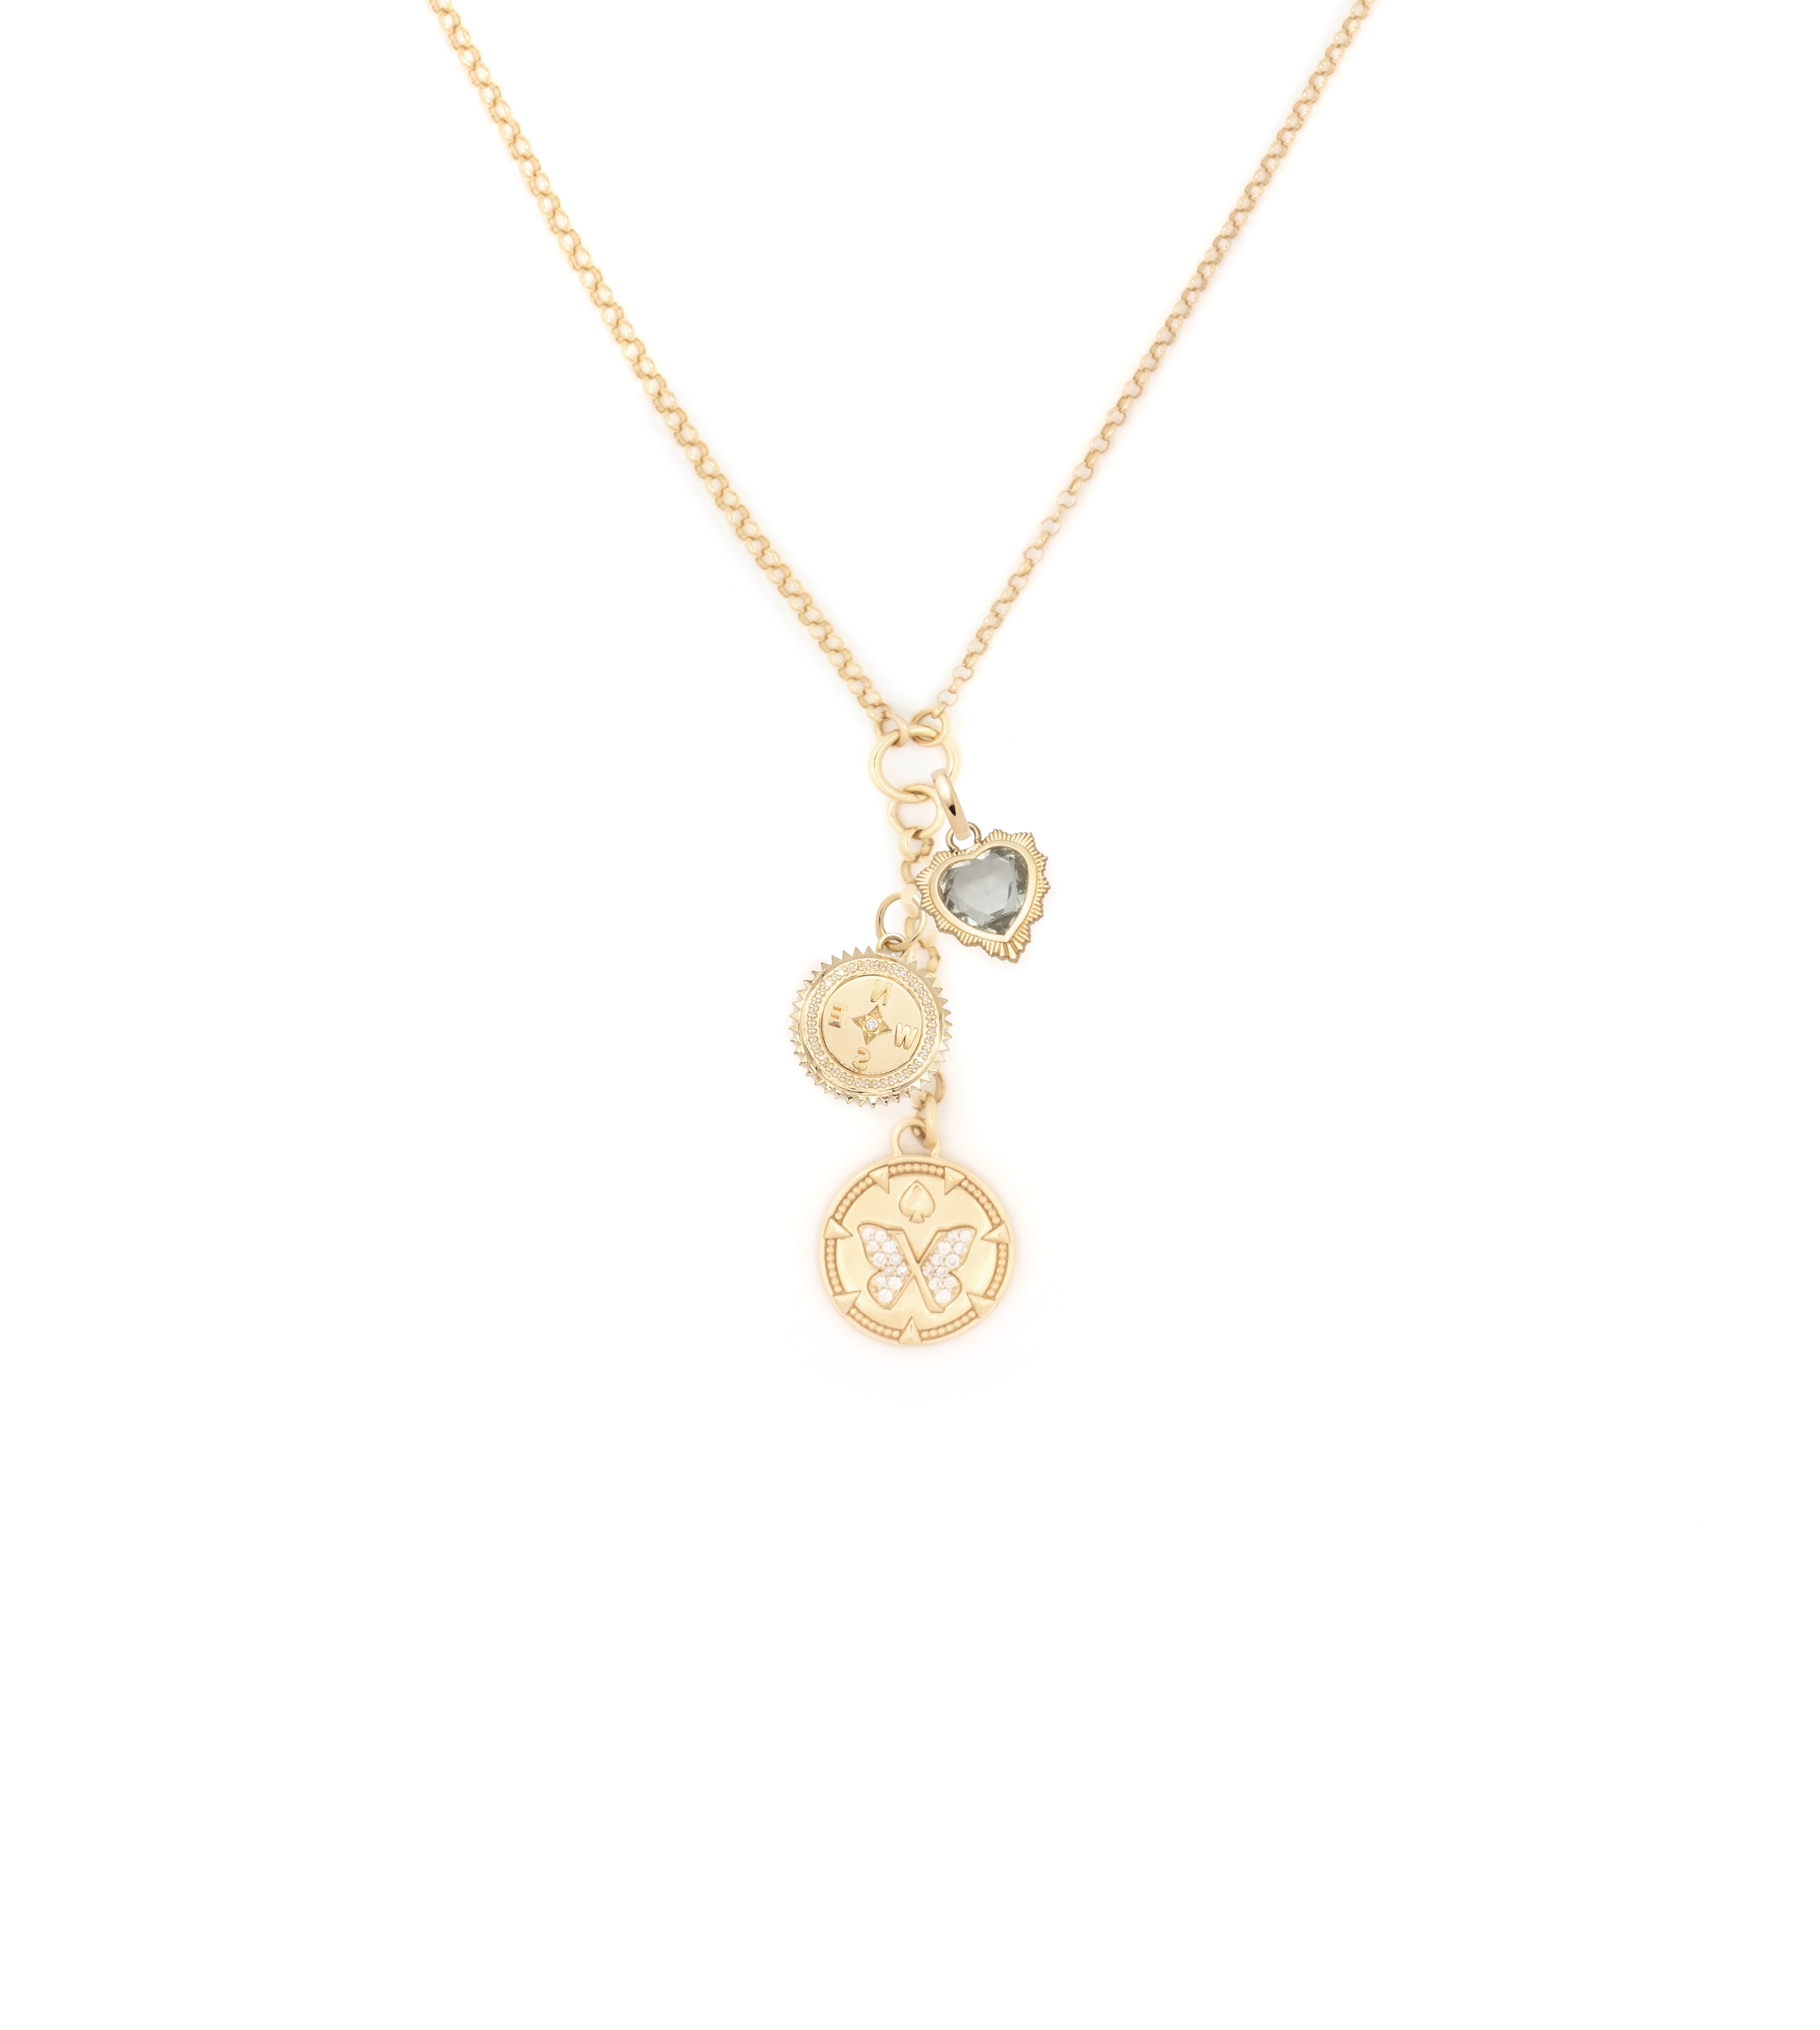 Reverie, Internal Compass & Gemstone Heart : Small Mixed Belcher Extension Chain Necklace